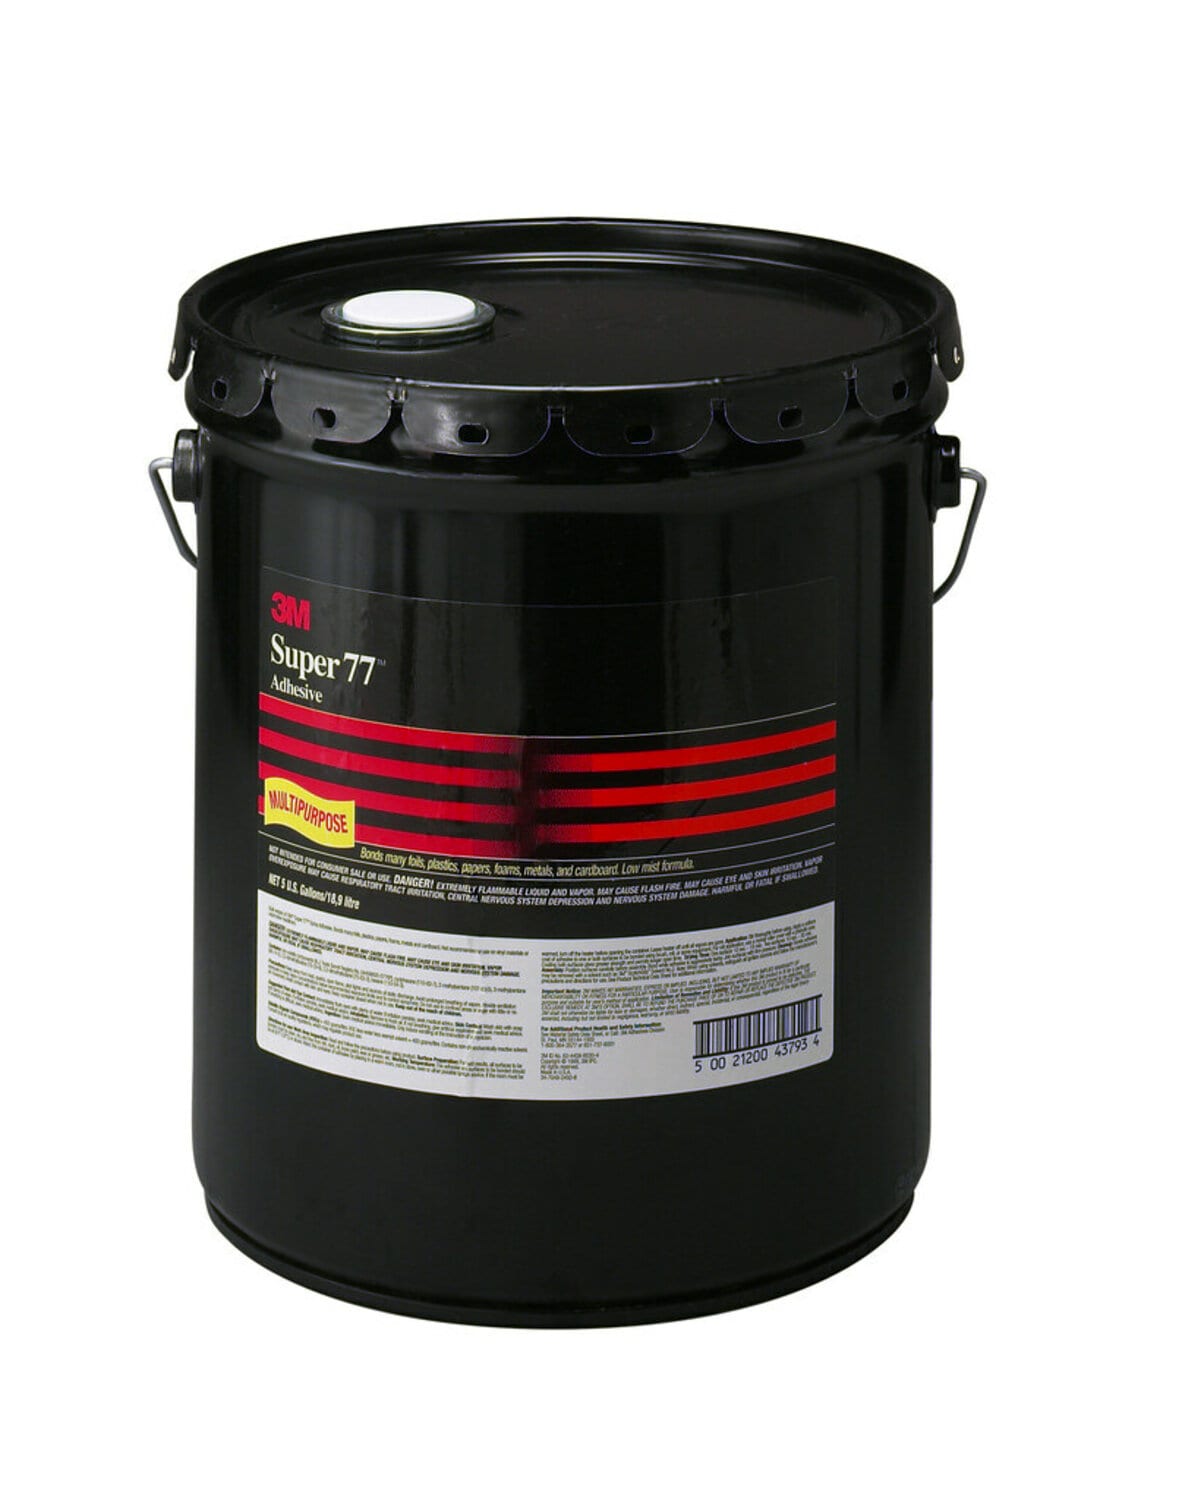 7000000919 - 3M Super 77 Classic Spray Adhesive, Clear, 5 Gallon Drum (Pail)